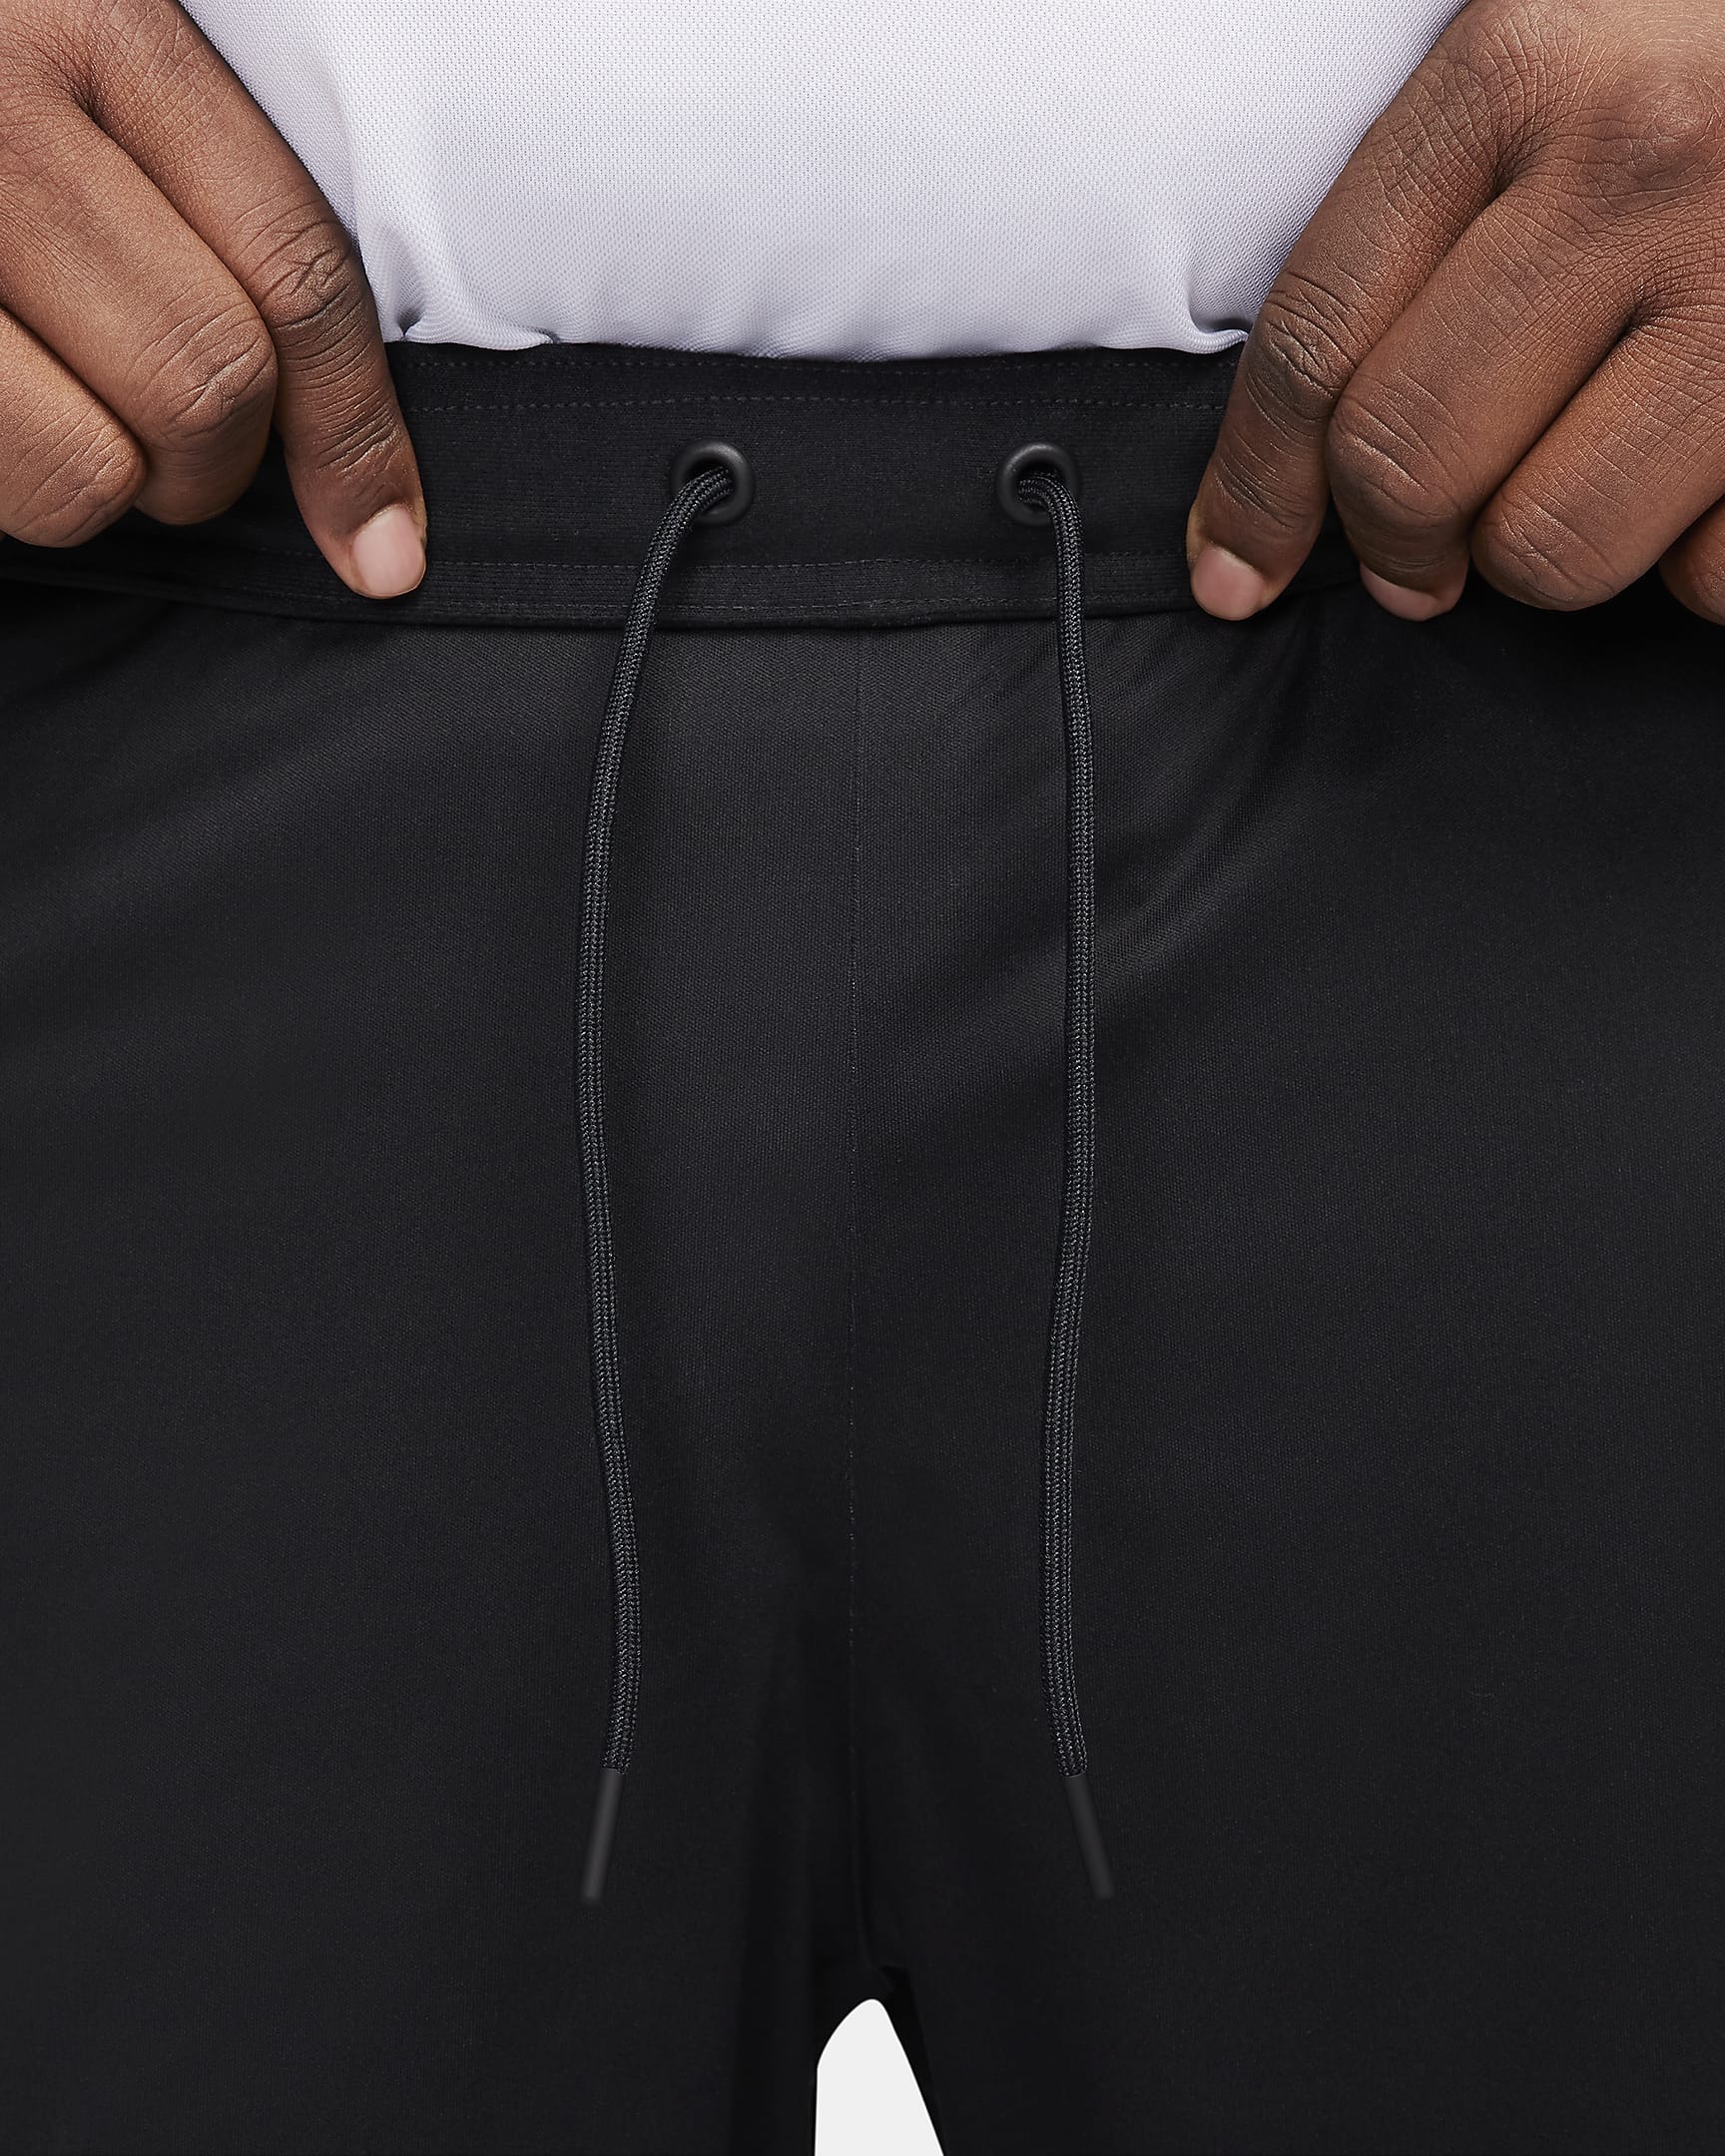 Pantalones de Golf para hombre Nike Storm-FIT ADV - Negro/Blanco